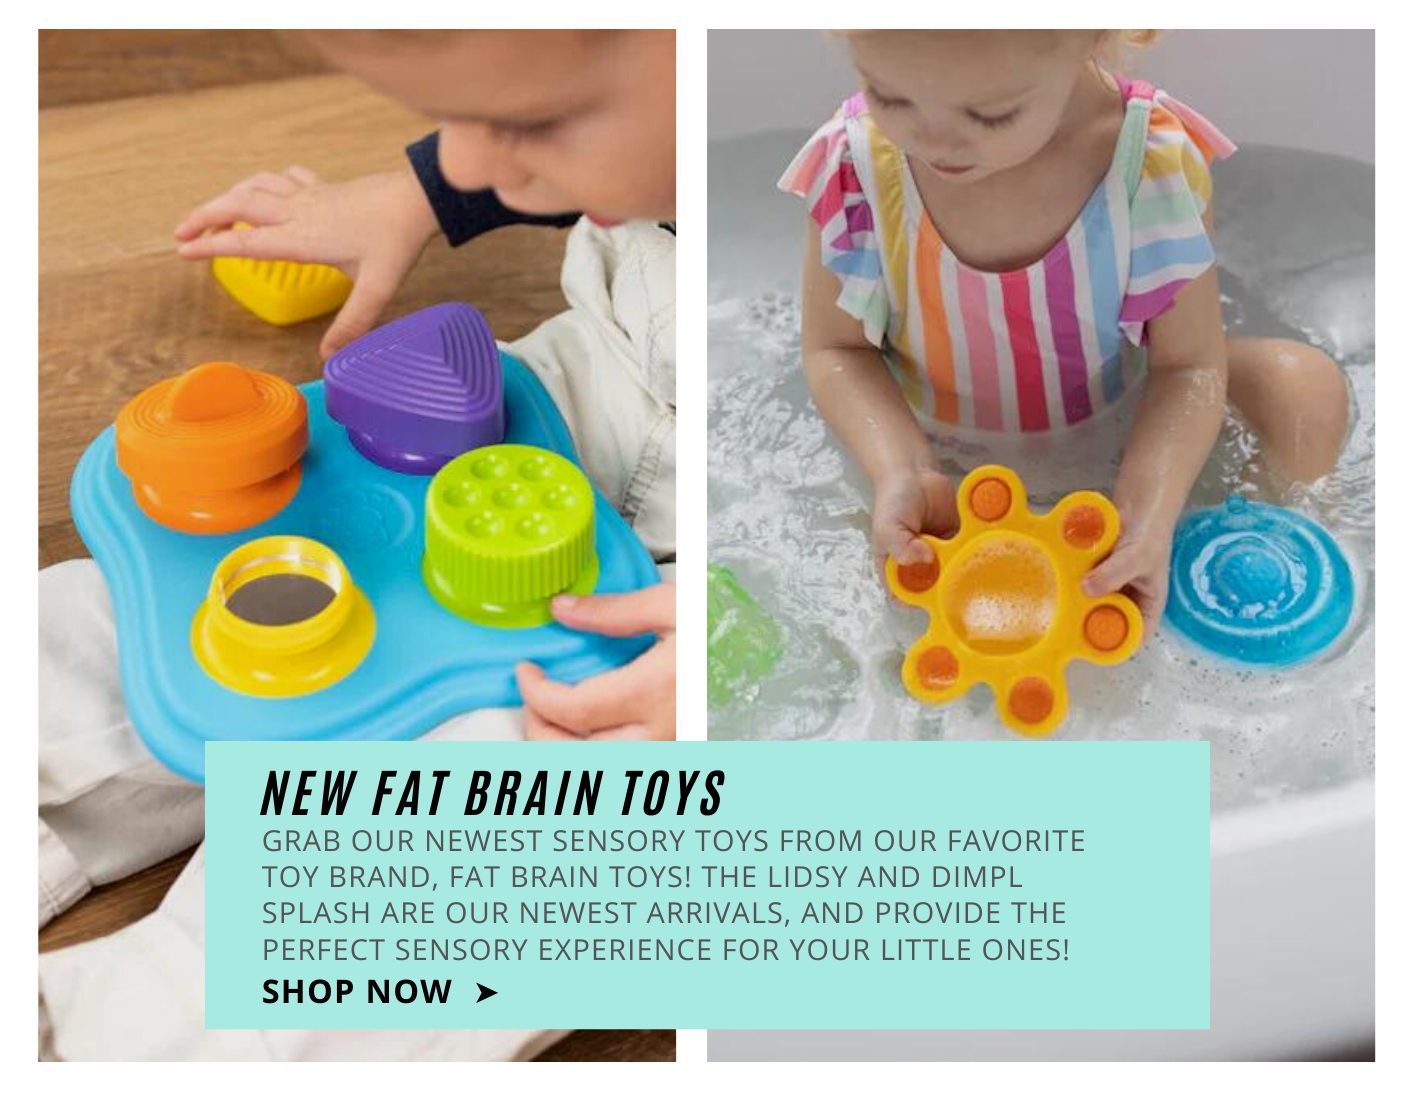 fat brain toys new arrivals